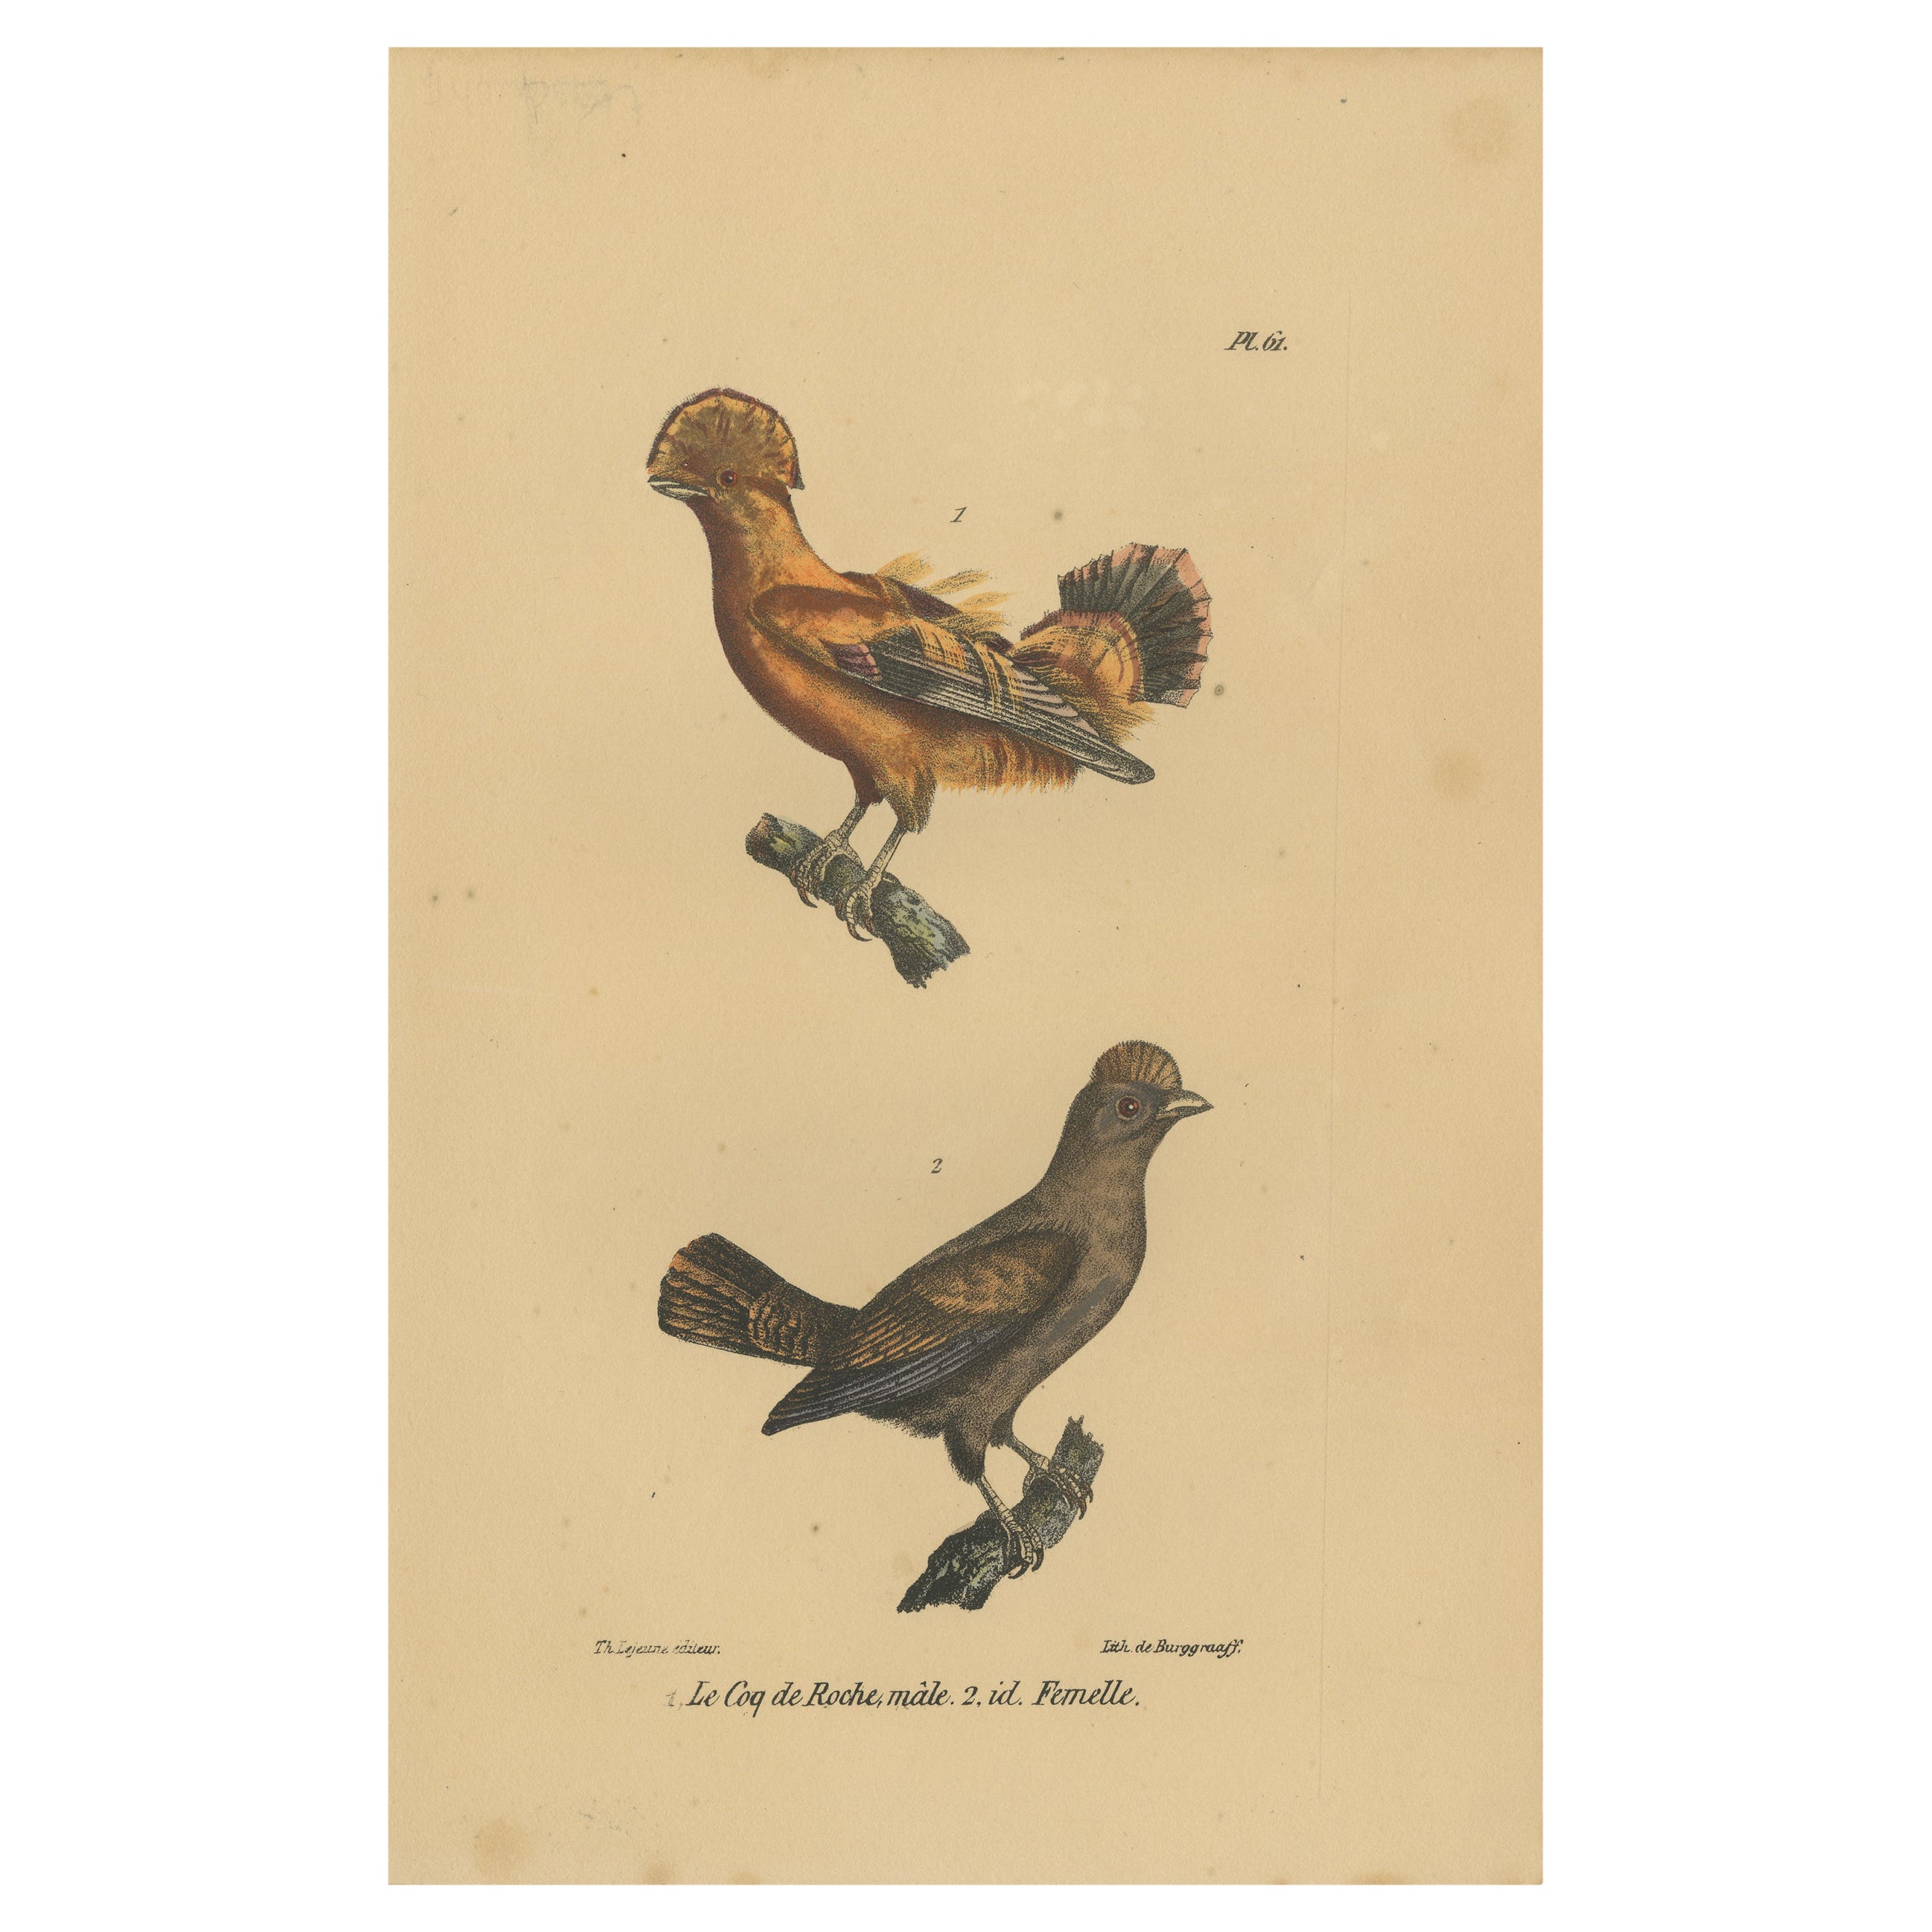 Pl. 61 Antique Bird Print of Cocks-of-the-Rock by Lejeune 'c.1830'